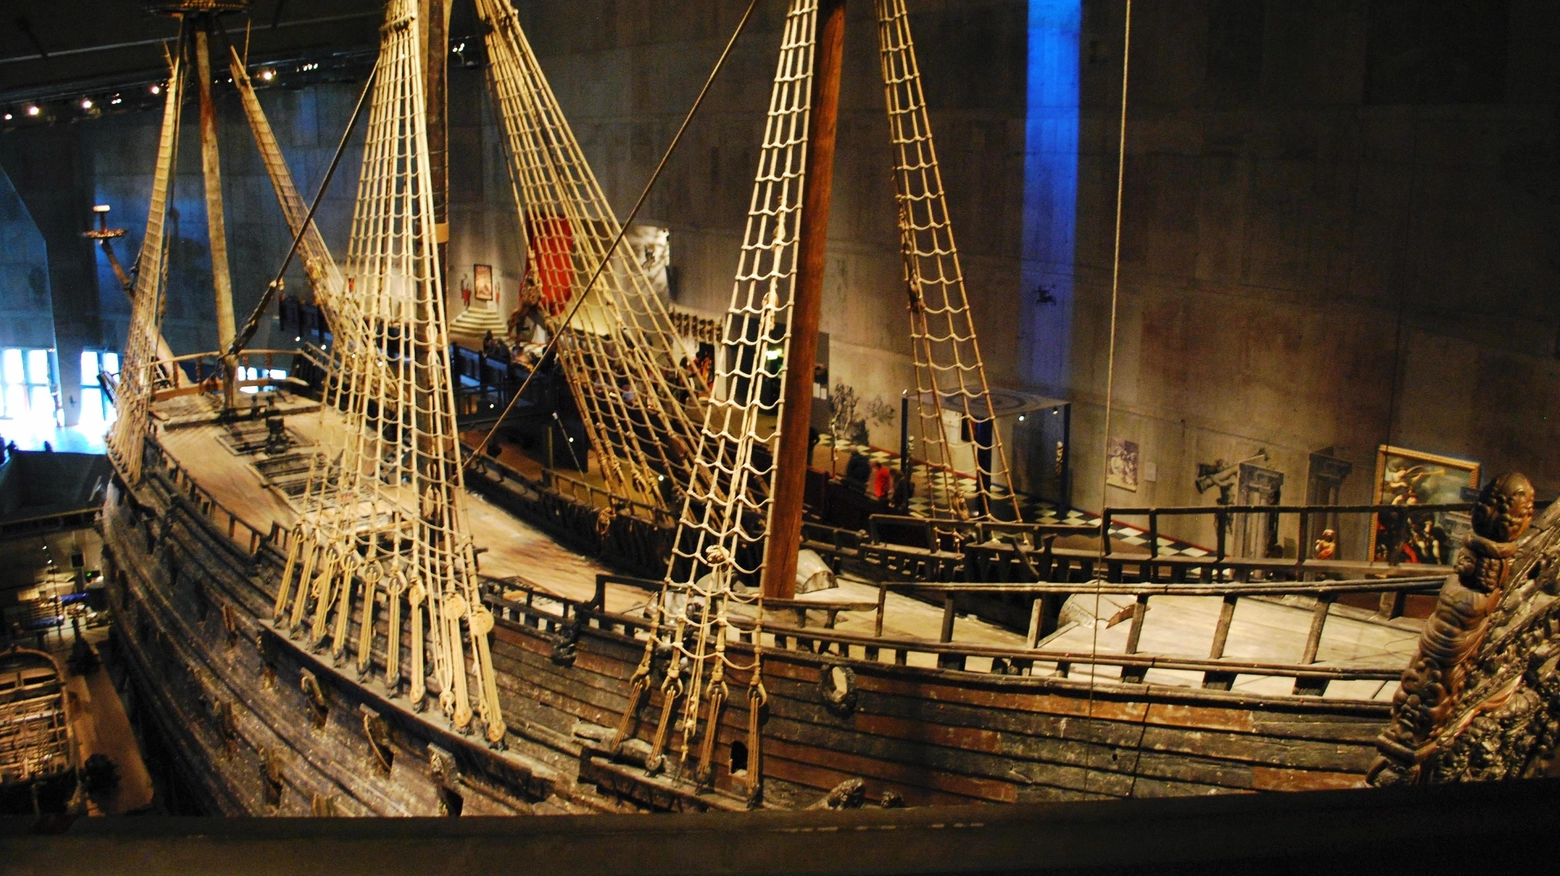 Il vascello Vasa a Stoccolma (Ansa)